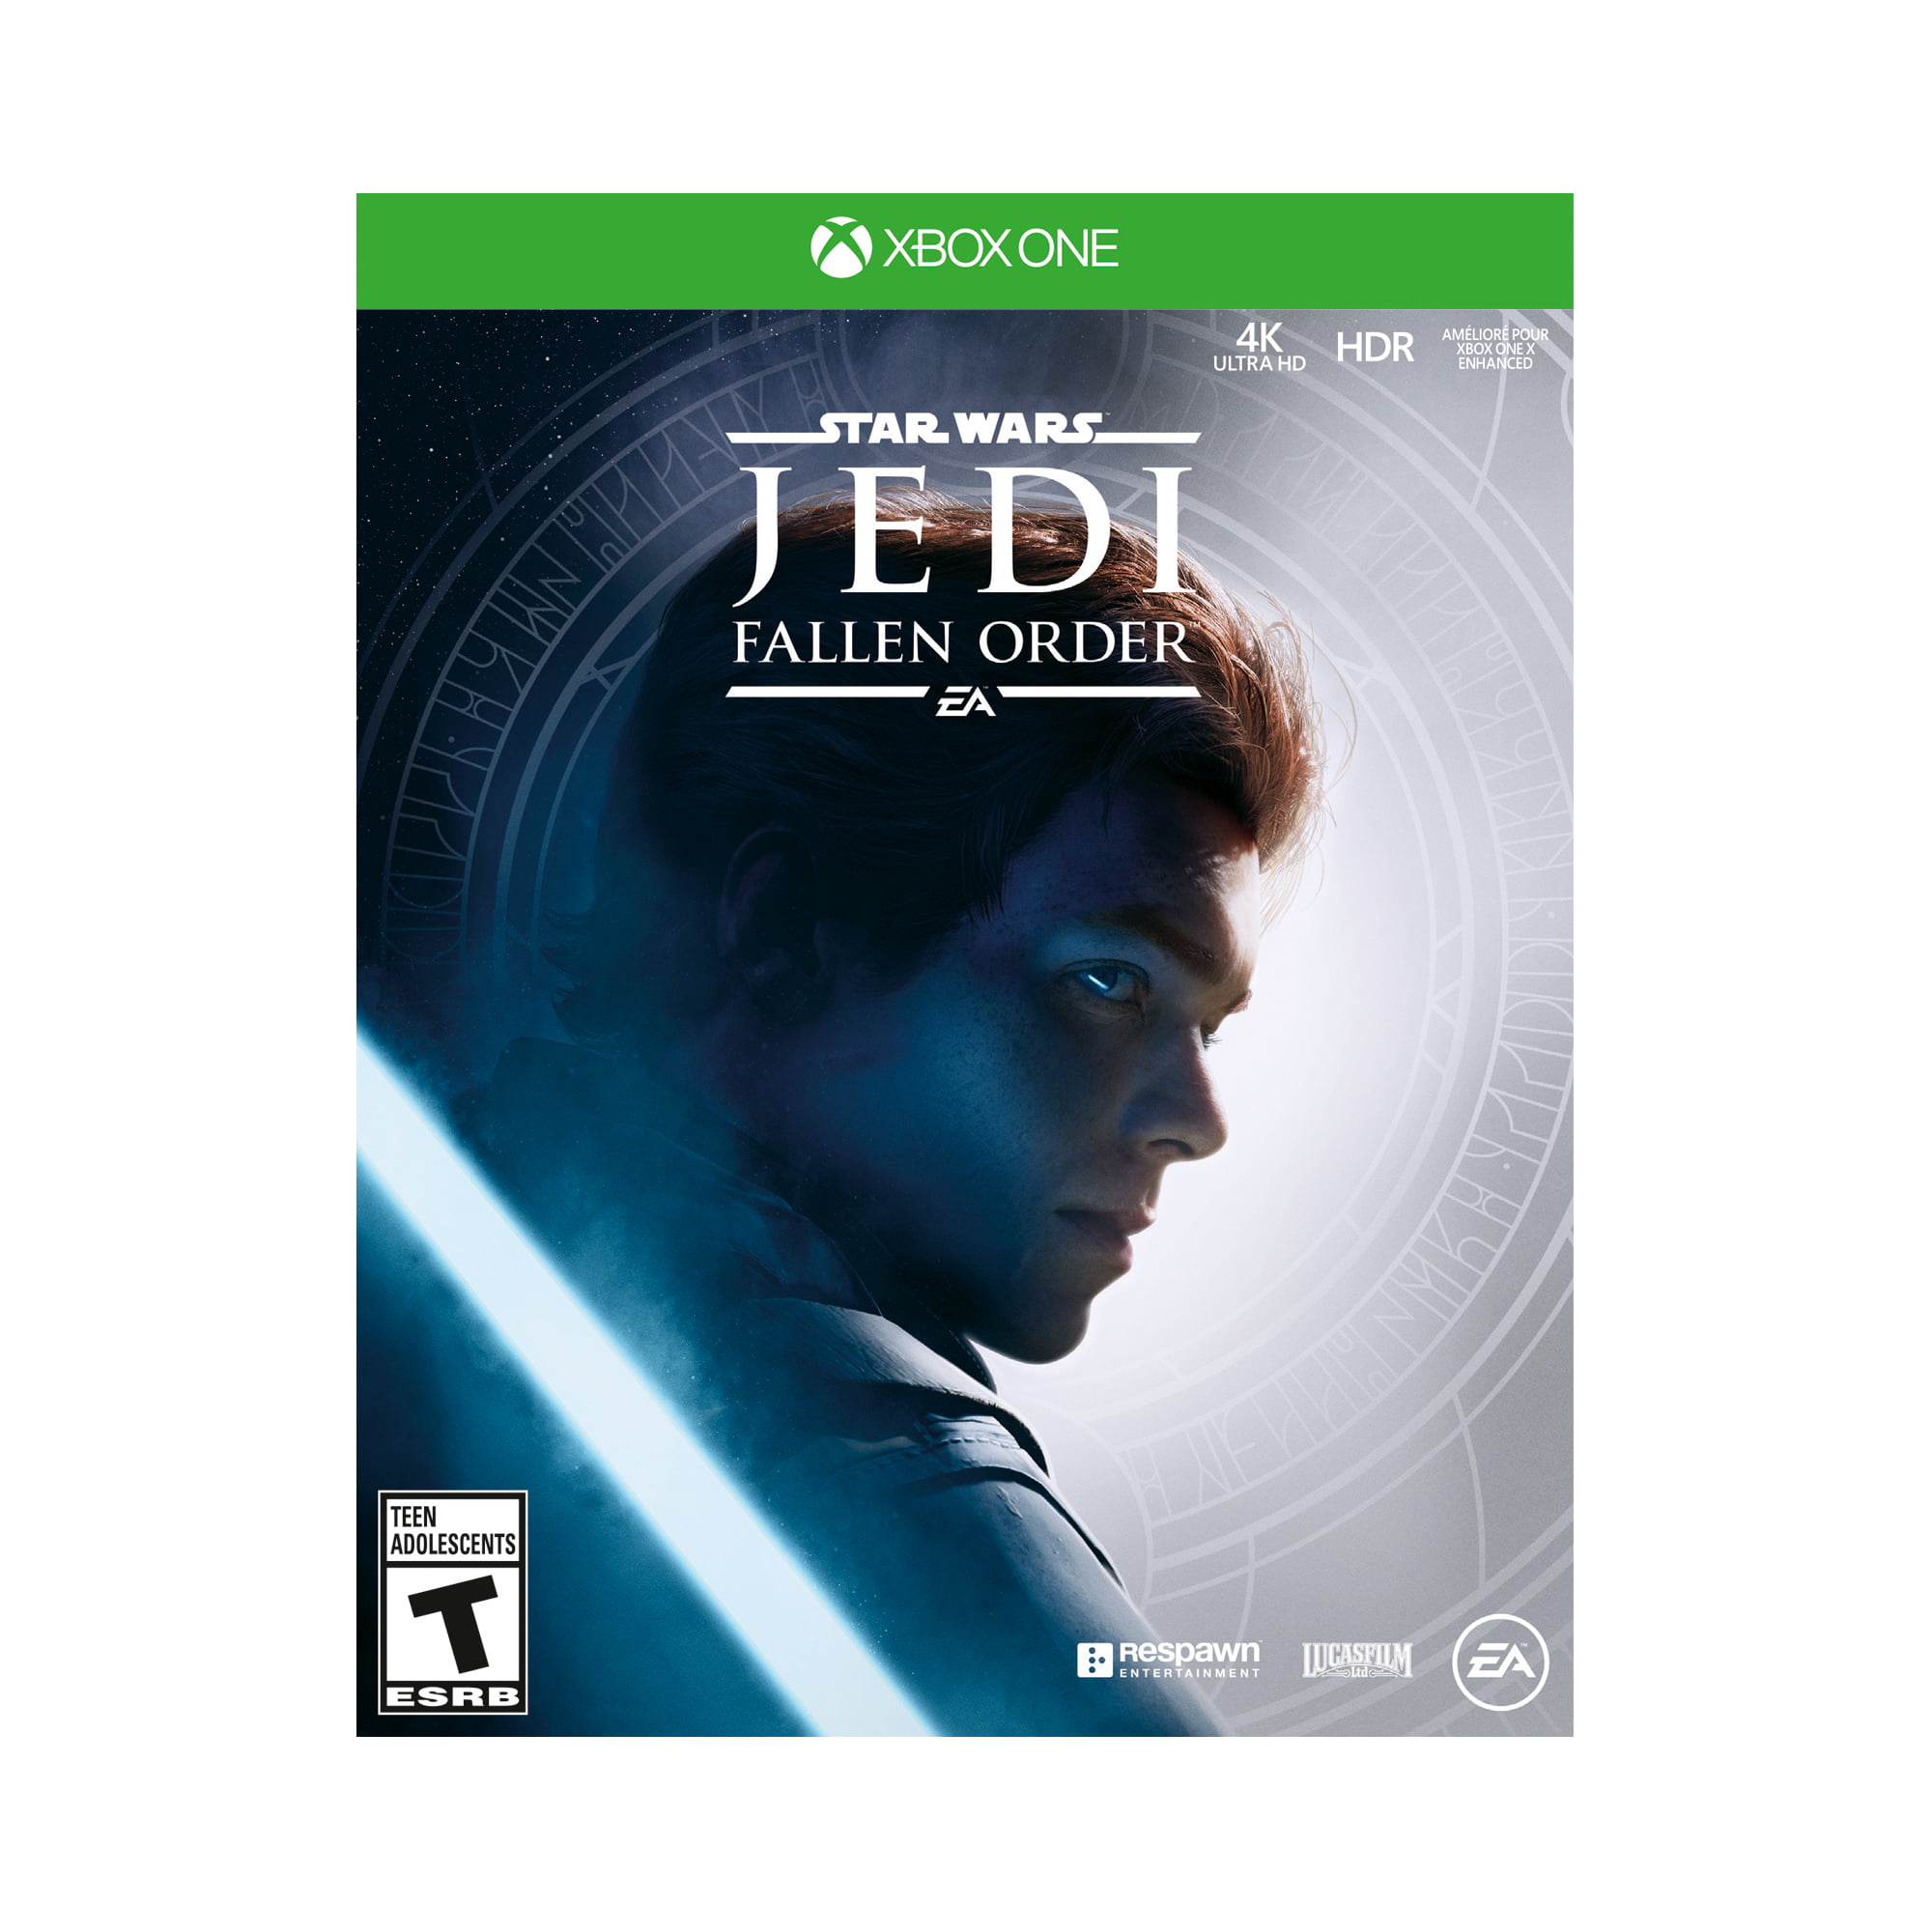 Hangen Ongehoorzaamheid Wees tevreden Microsoft Xbox One X 1TB Star Wars Jedi: Fallen Order™, Black, CYV-00411 -  Walmart.com